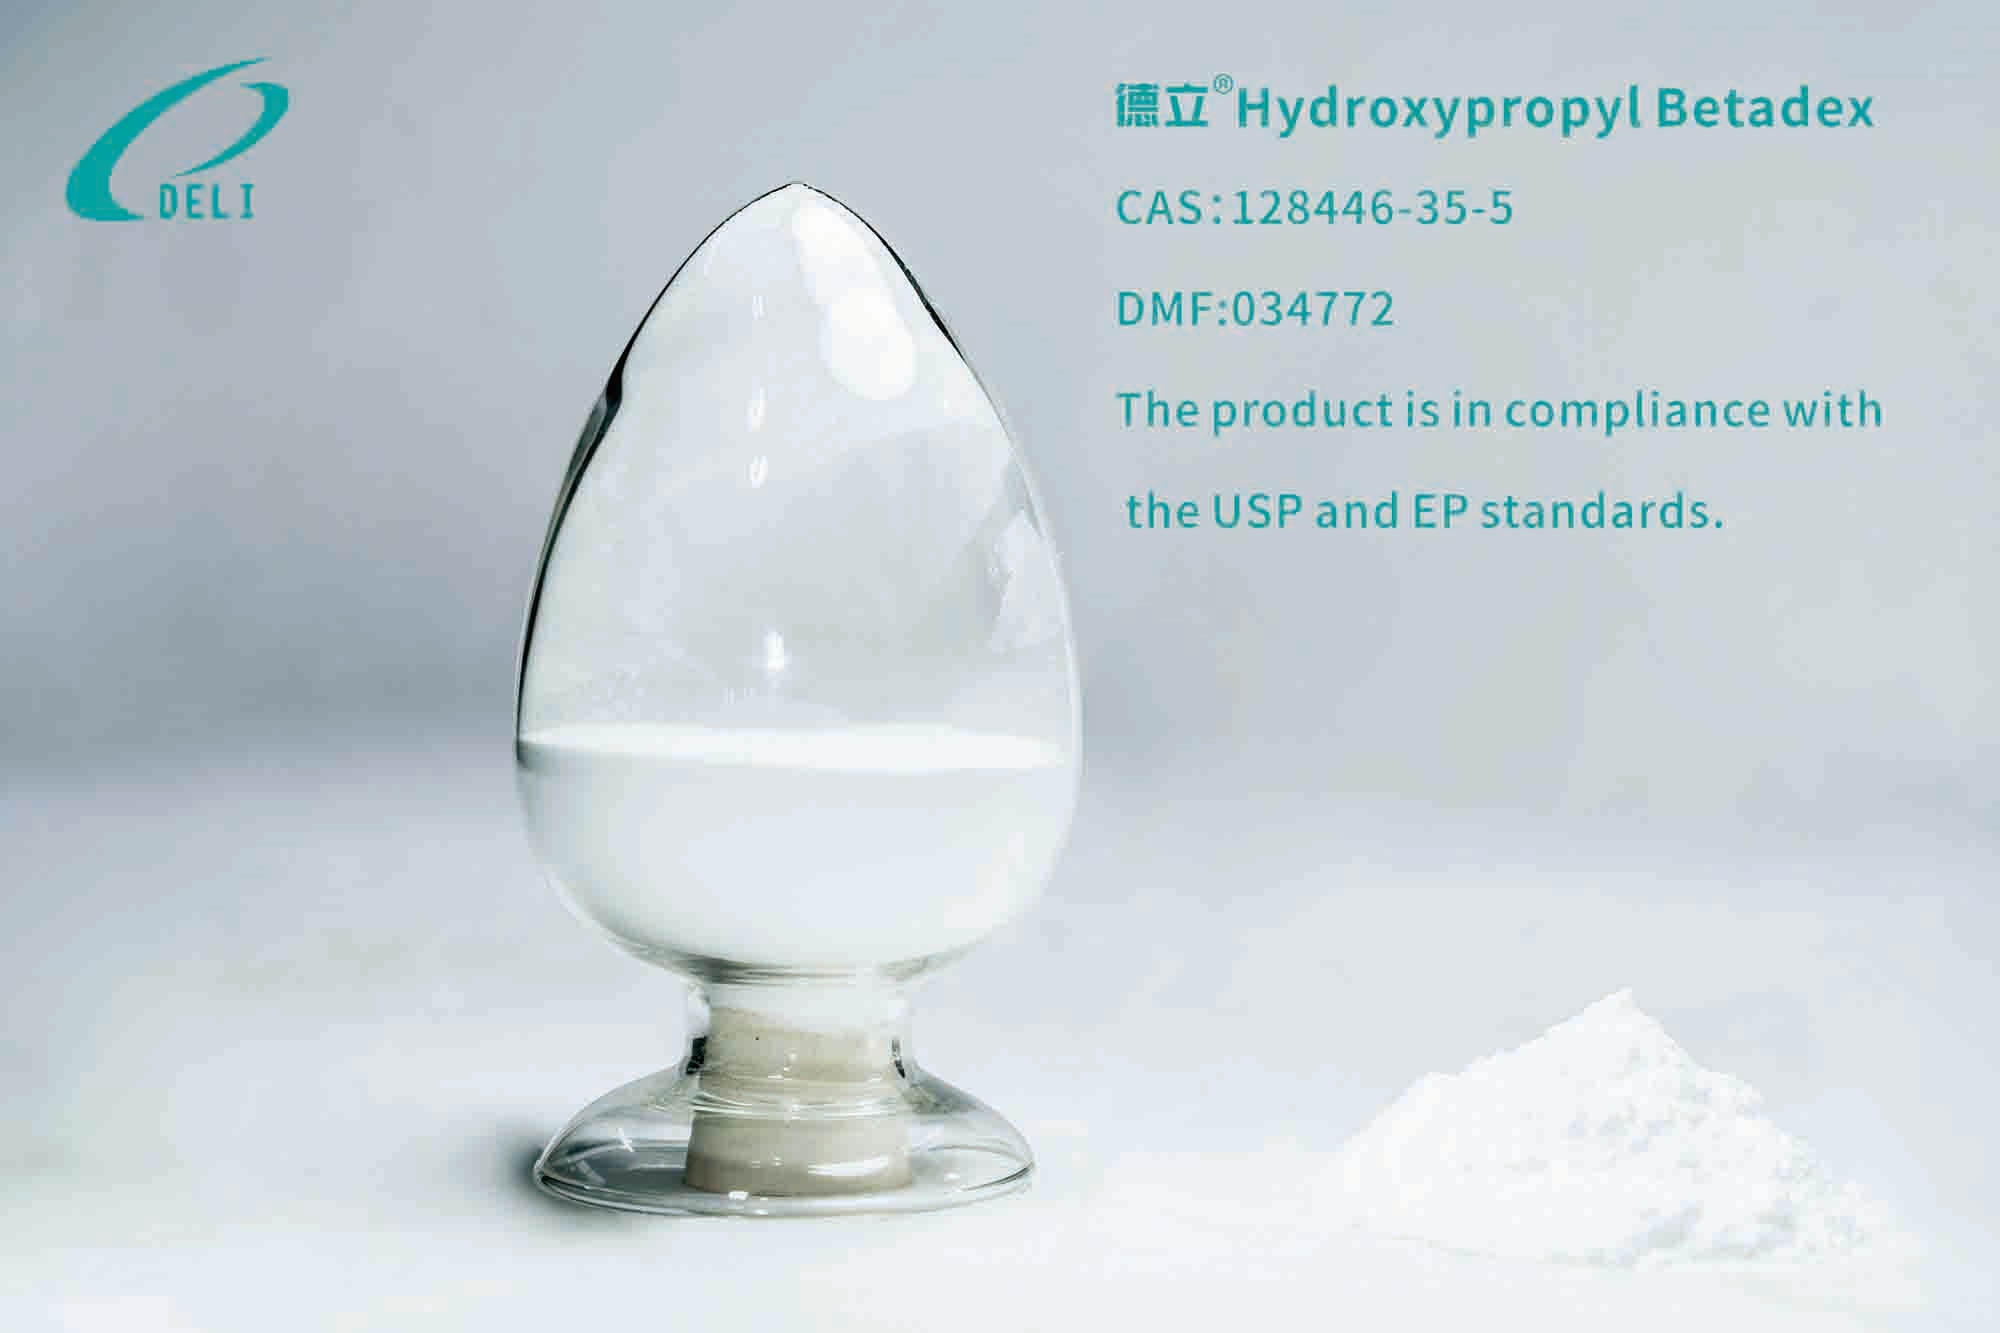 What is hydroxypropyl betadex?